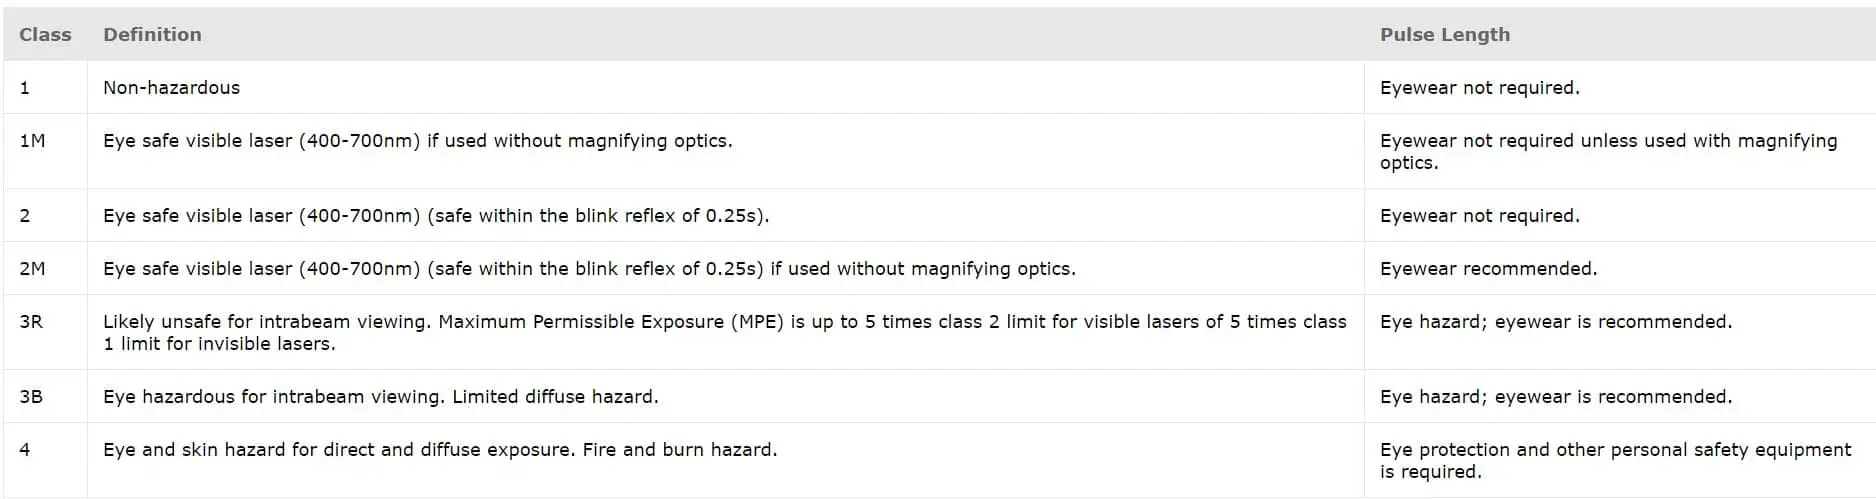 laser safety falls under the standard of ANSI Z136.1